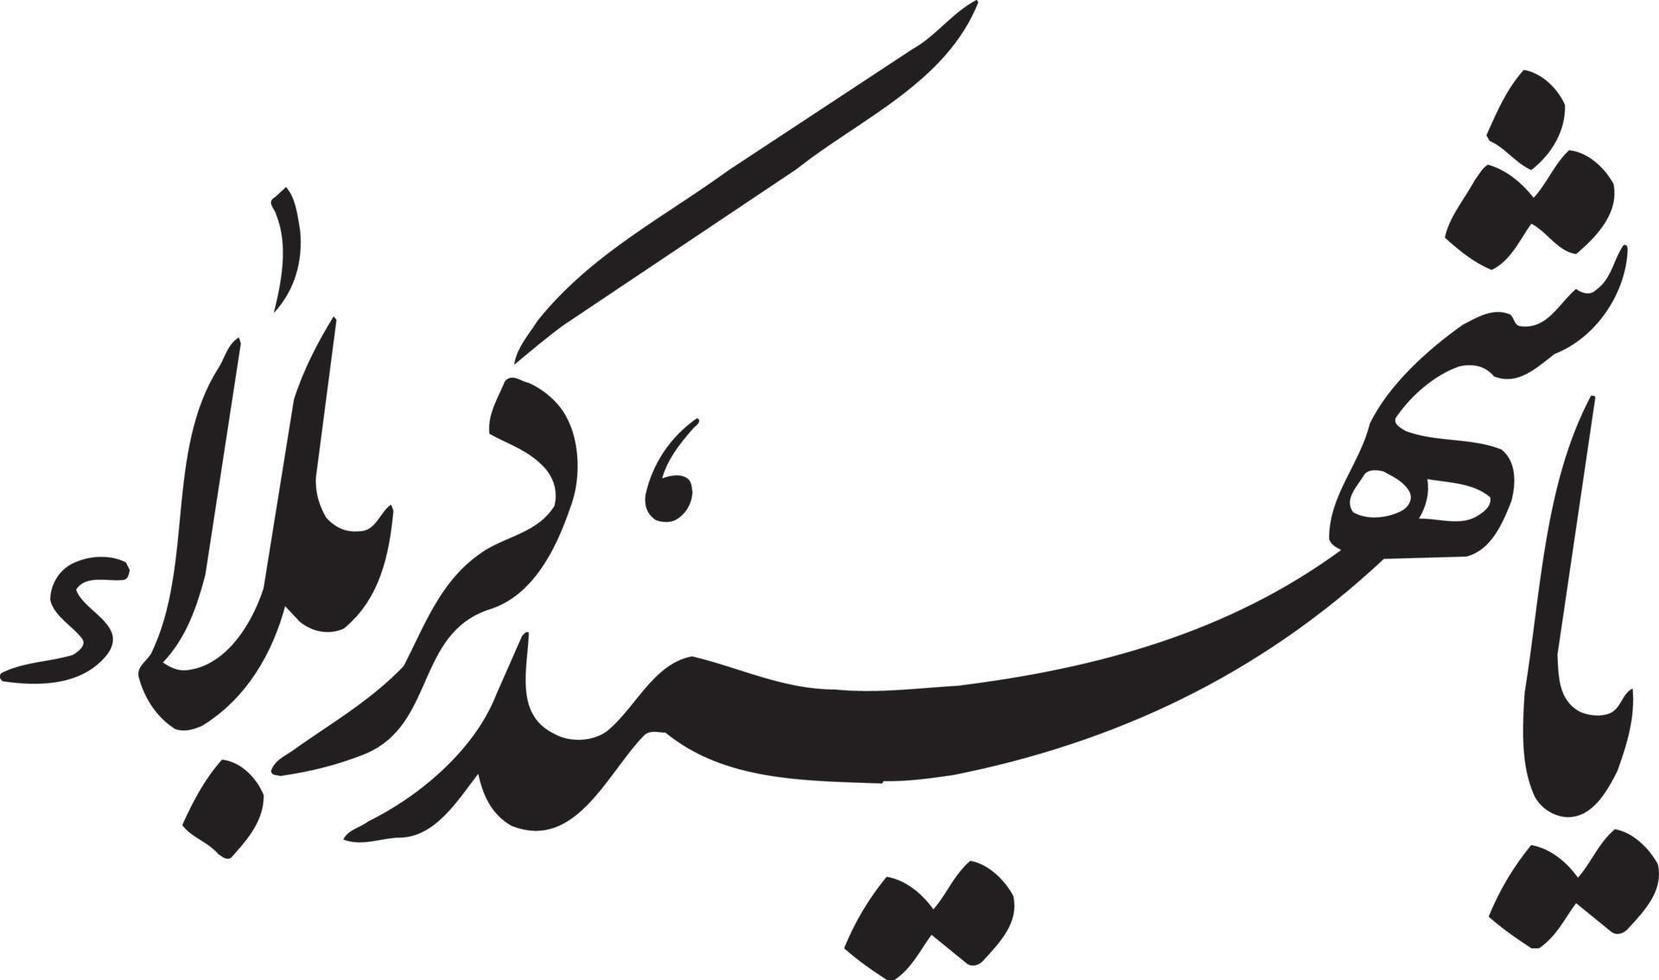 ya sheed krbla título vetor livre de caligrafia árabe urdu islâmica